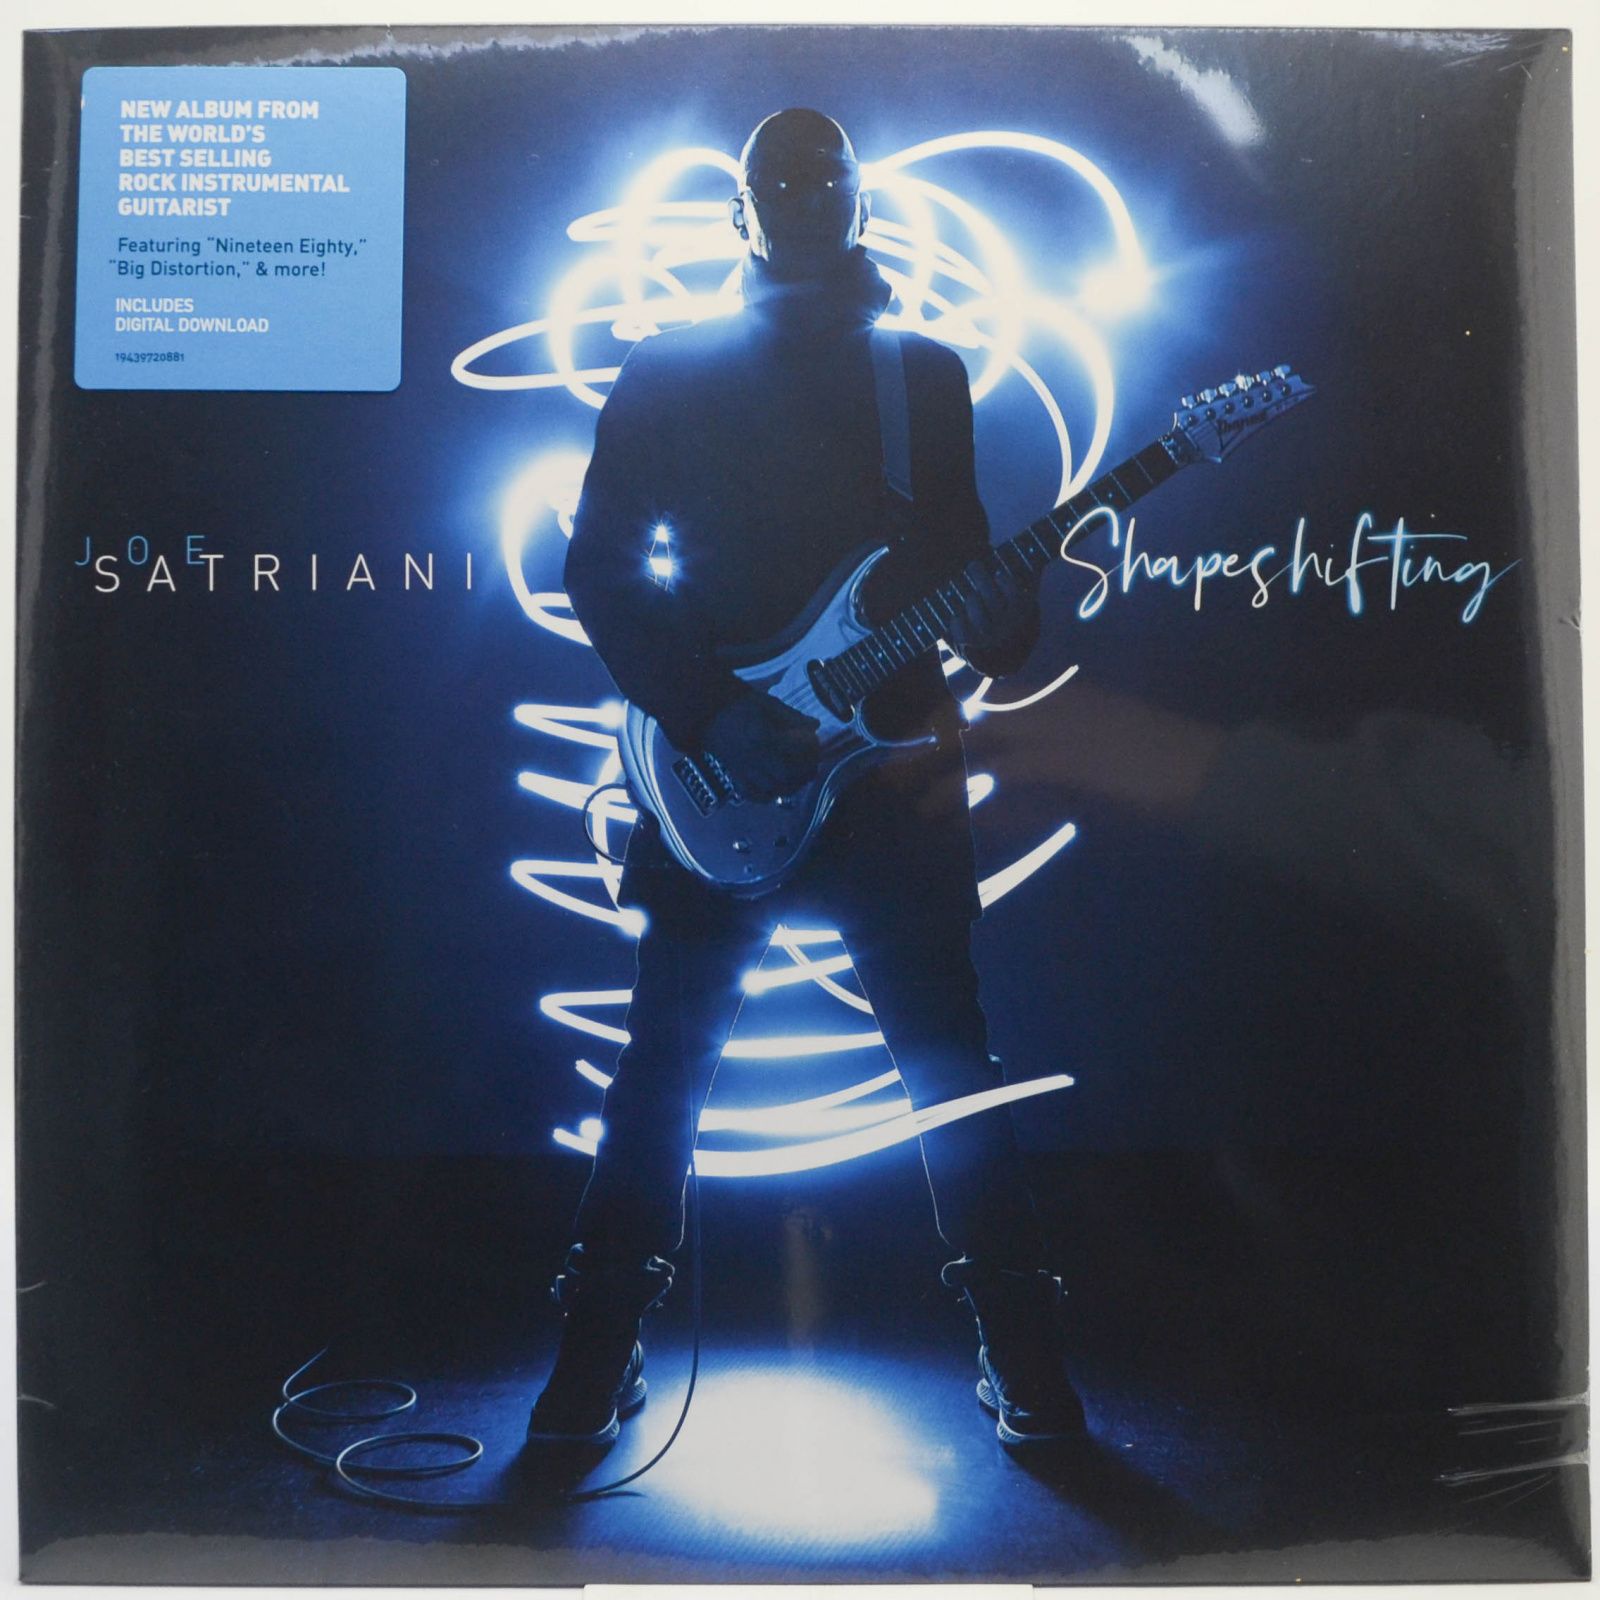 Joe Satriani — Shapeshifting, 2020